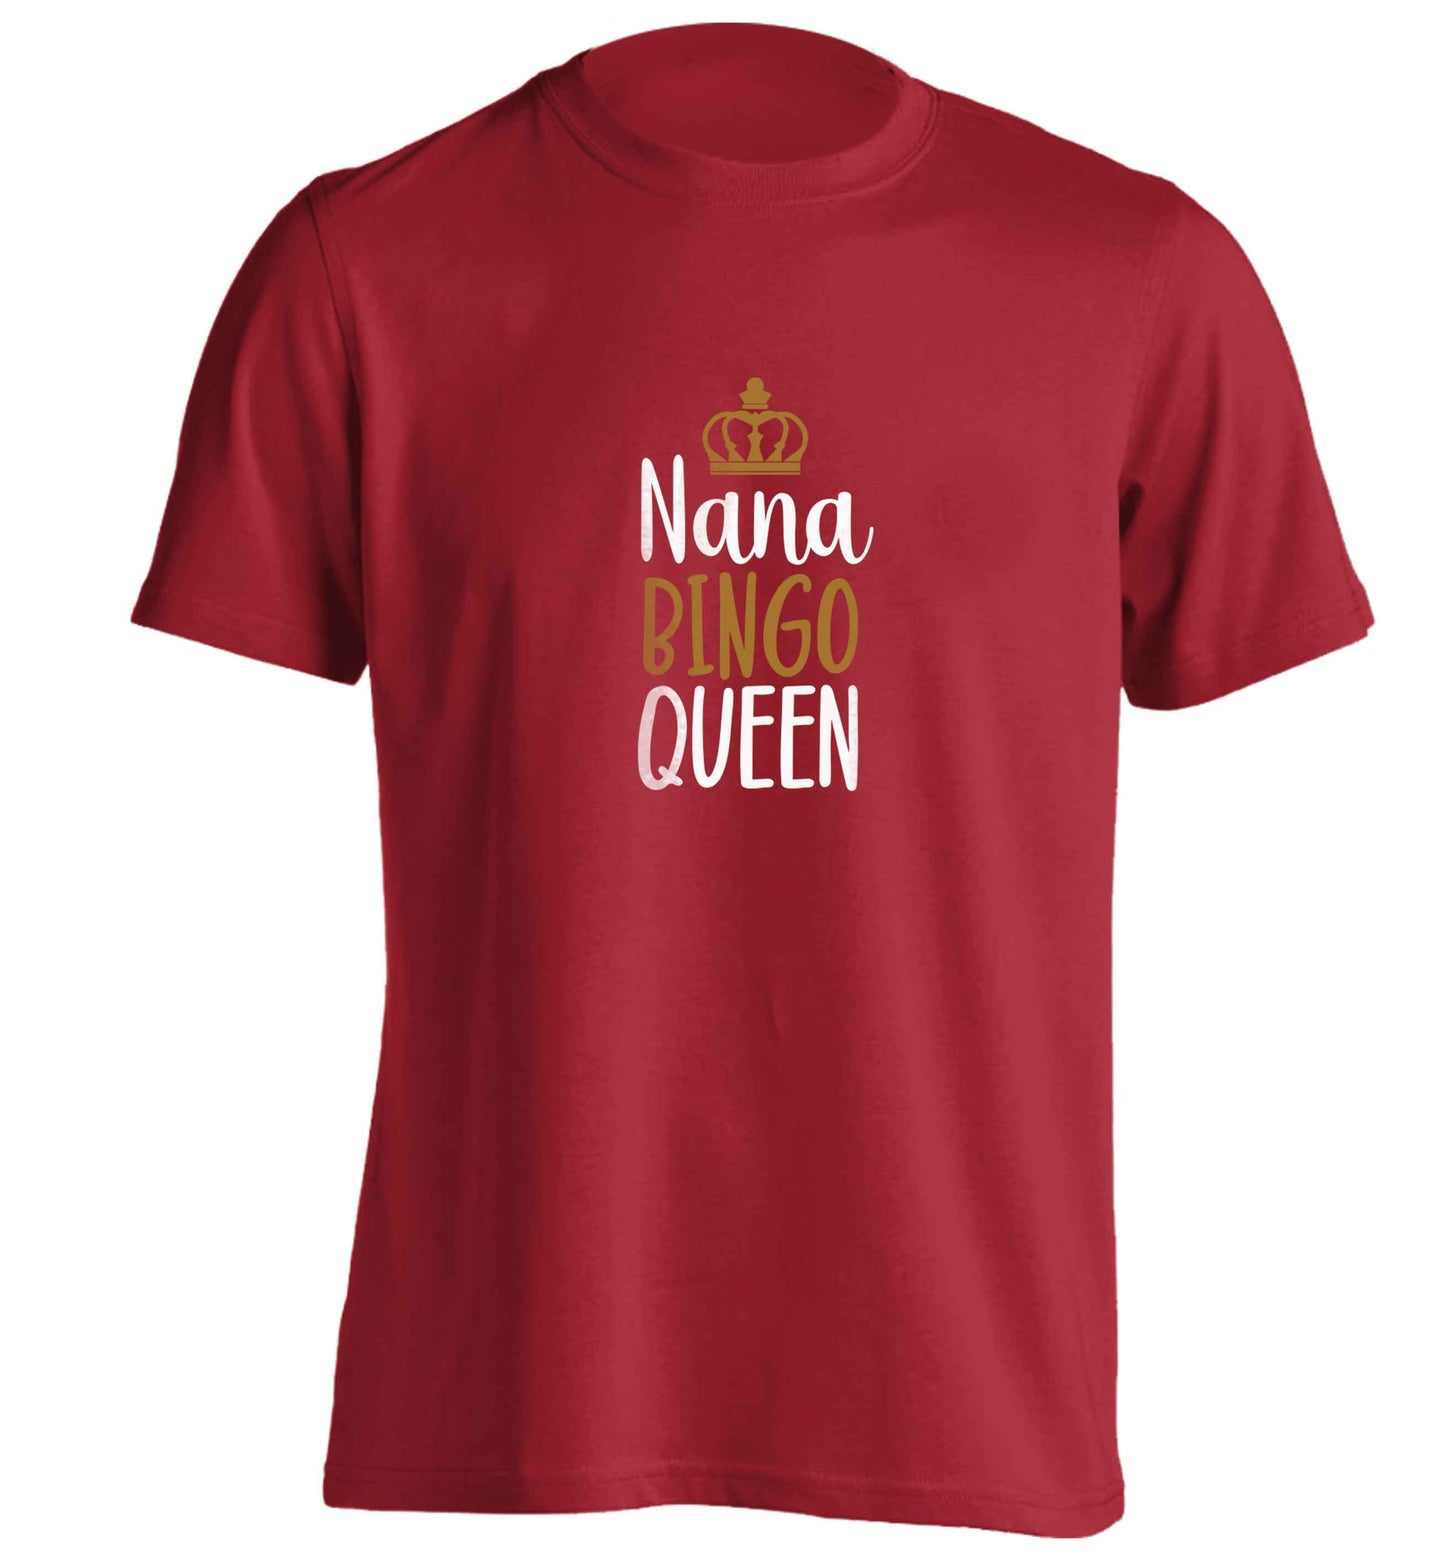 Personalised bingo queen adults unisex red Tshirt 2XL